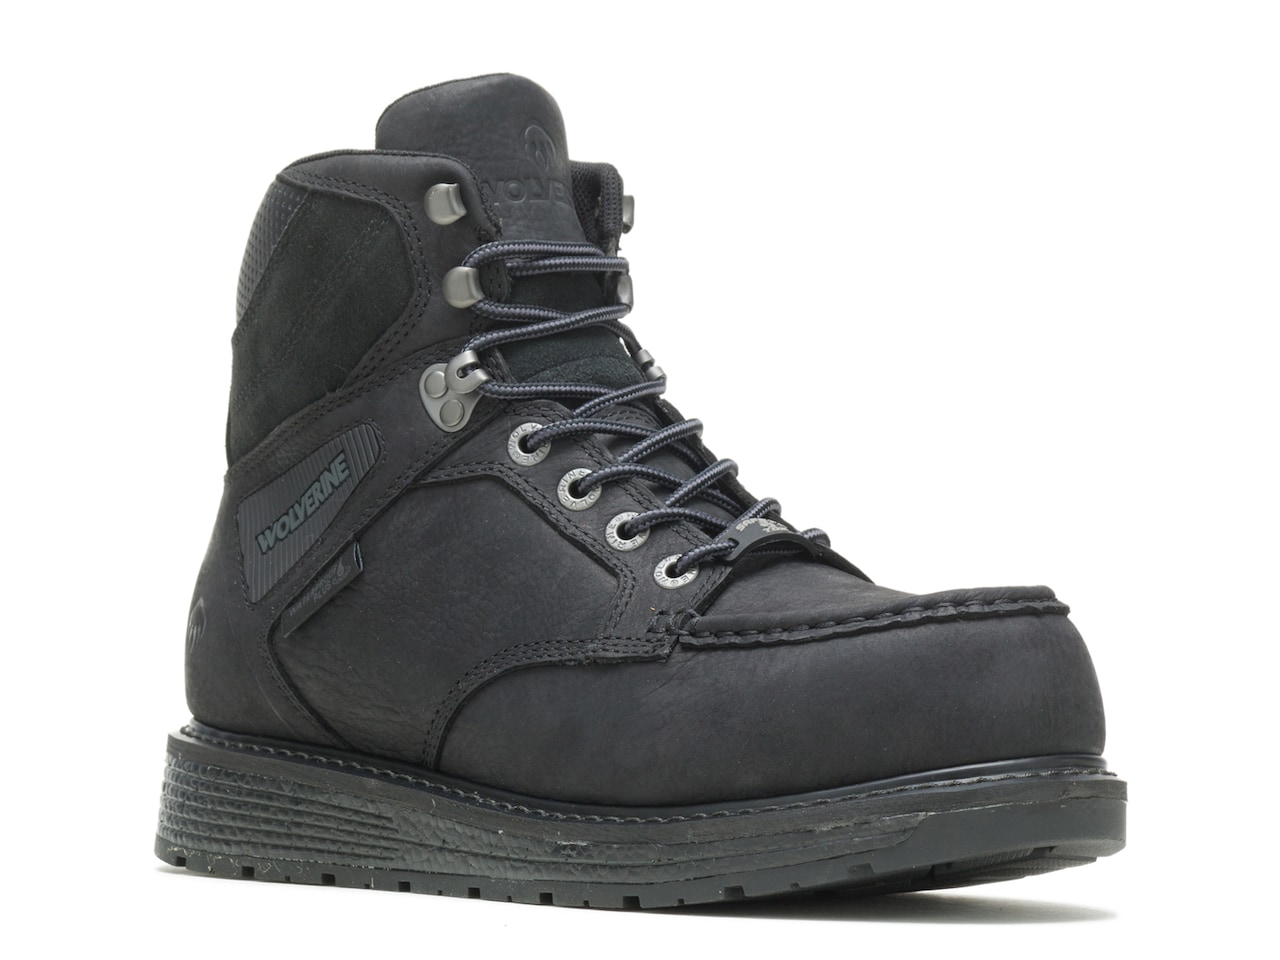 Wolverine Men's Footwear: Hellcat Wedge Work Boots $34.98, Kickstart Durashock Work Boots $34.98 & More + Free Shipping